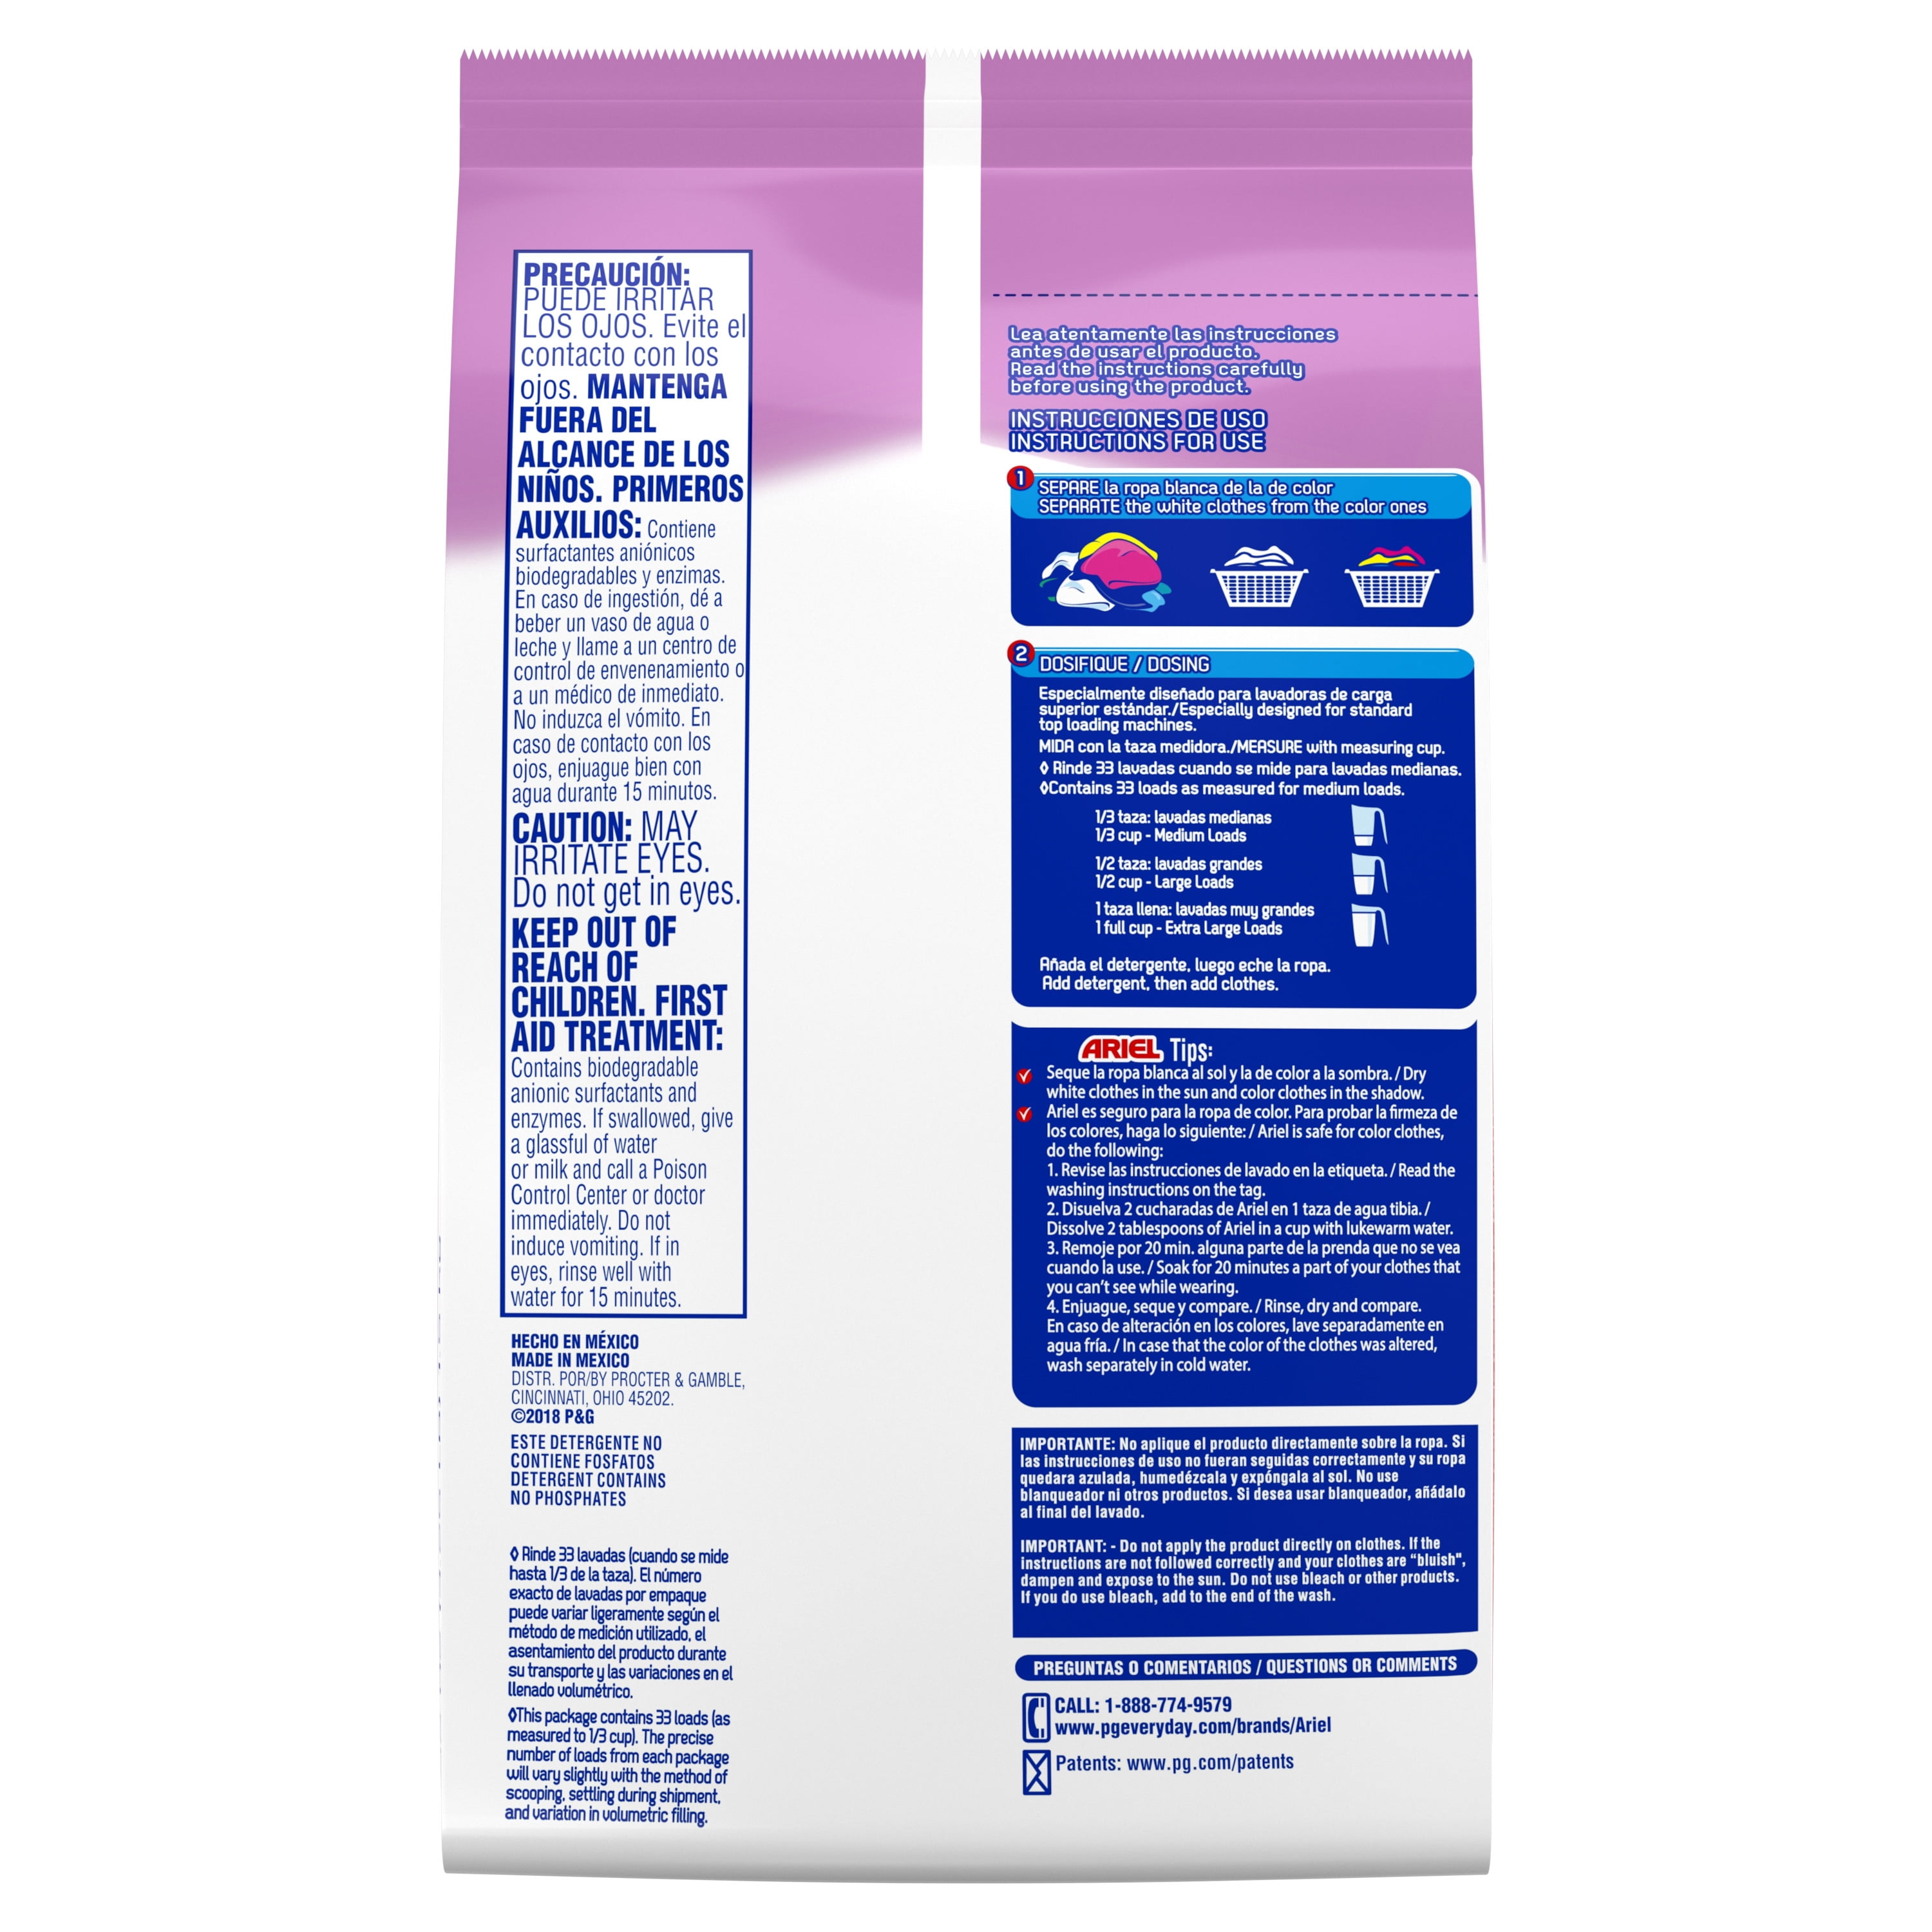  Ariel Touch of Lenor Fresh Liquid Laundry Detergent - 1.1 L /  20 WL : Health & Household